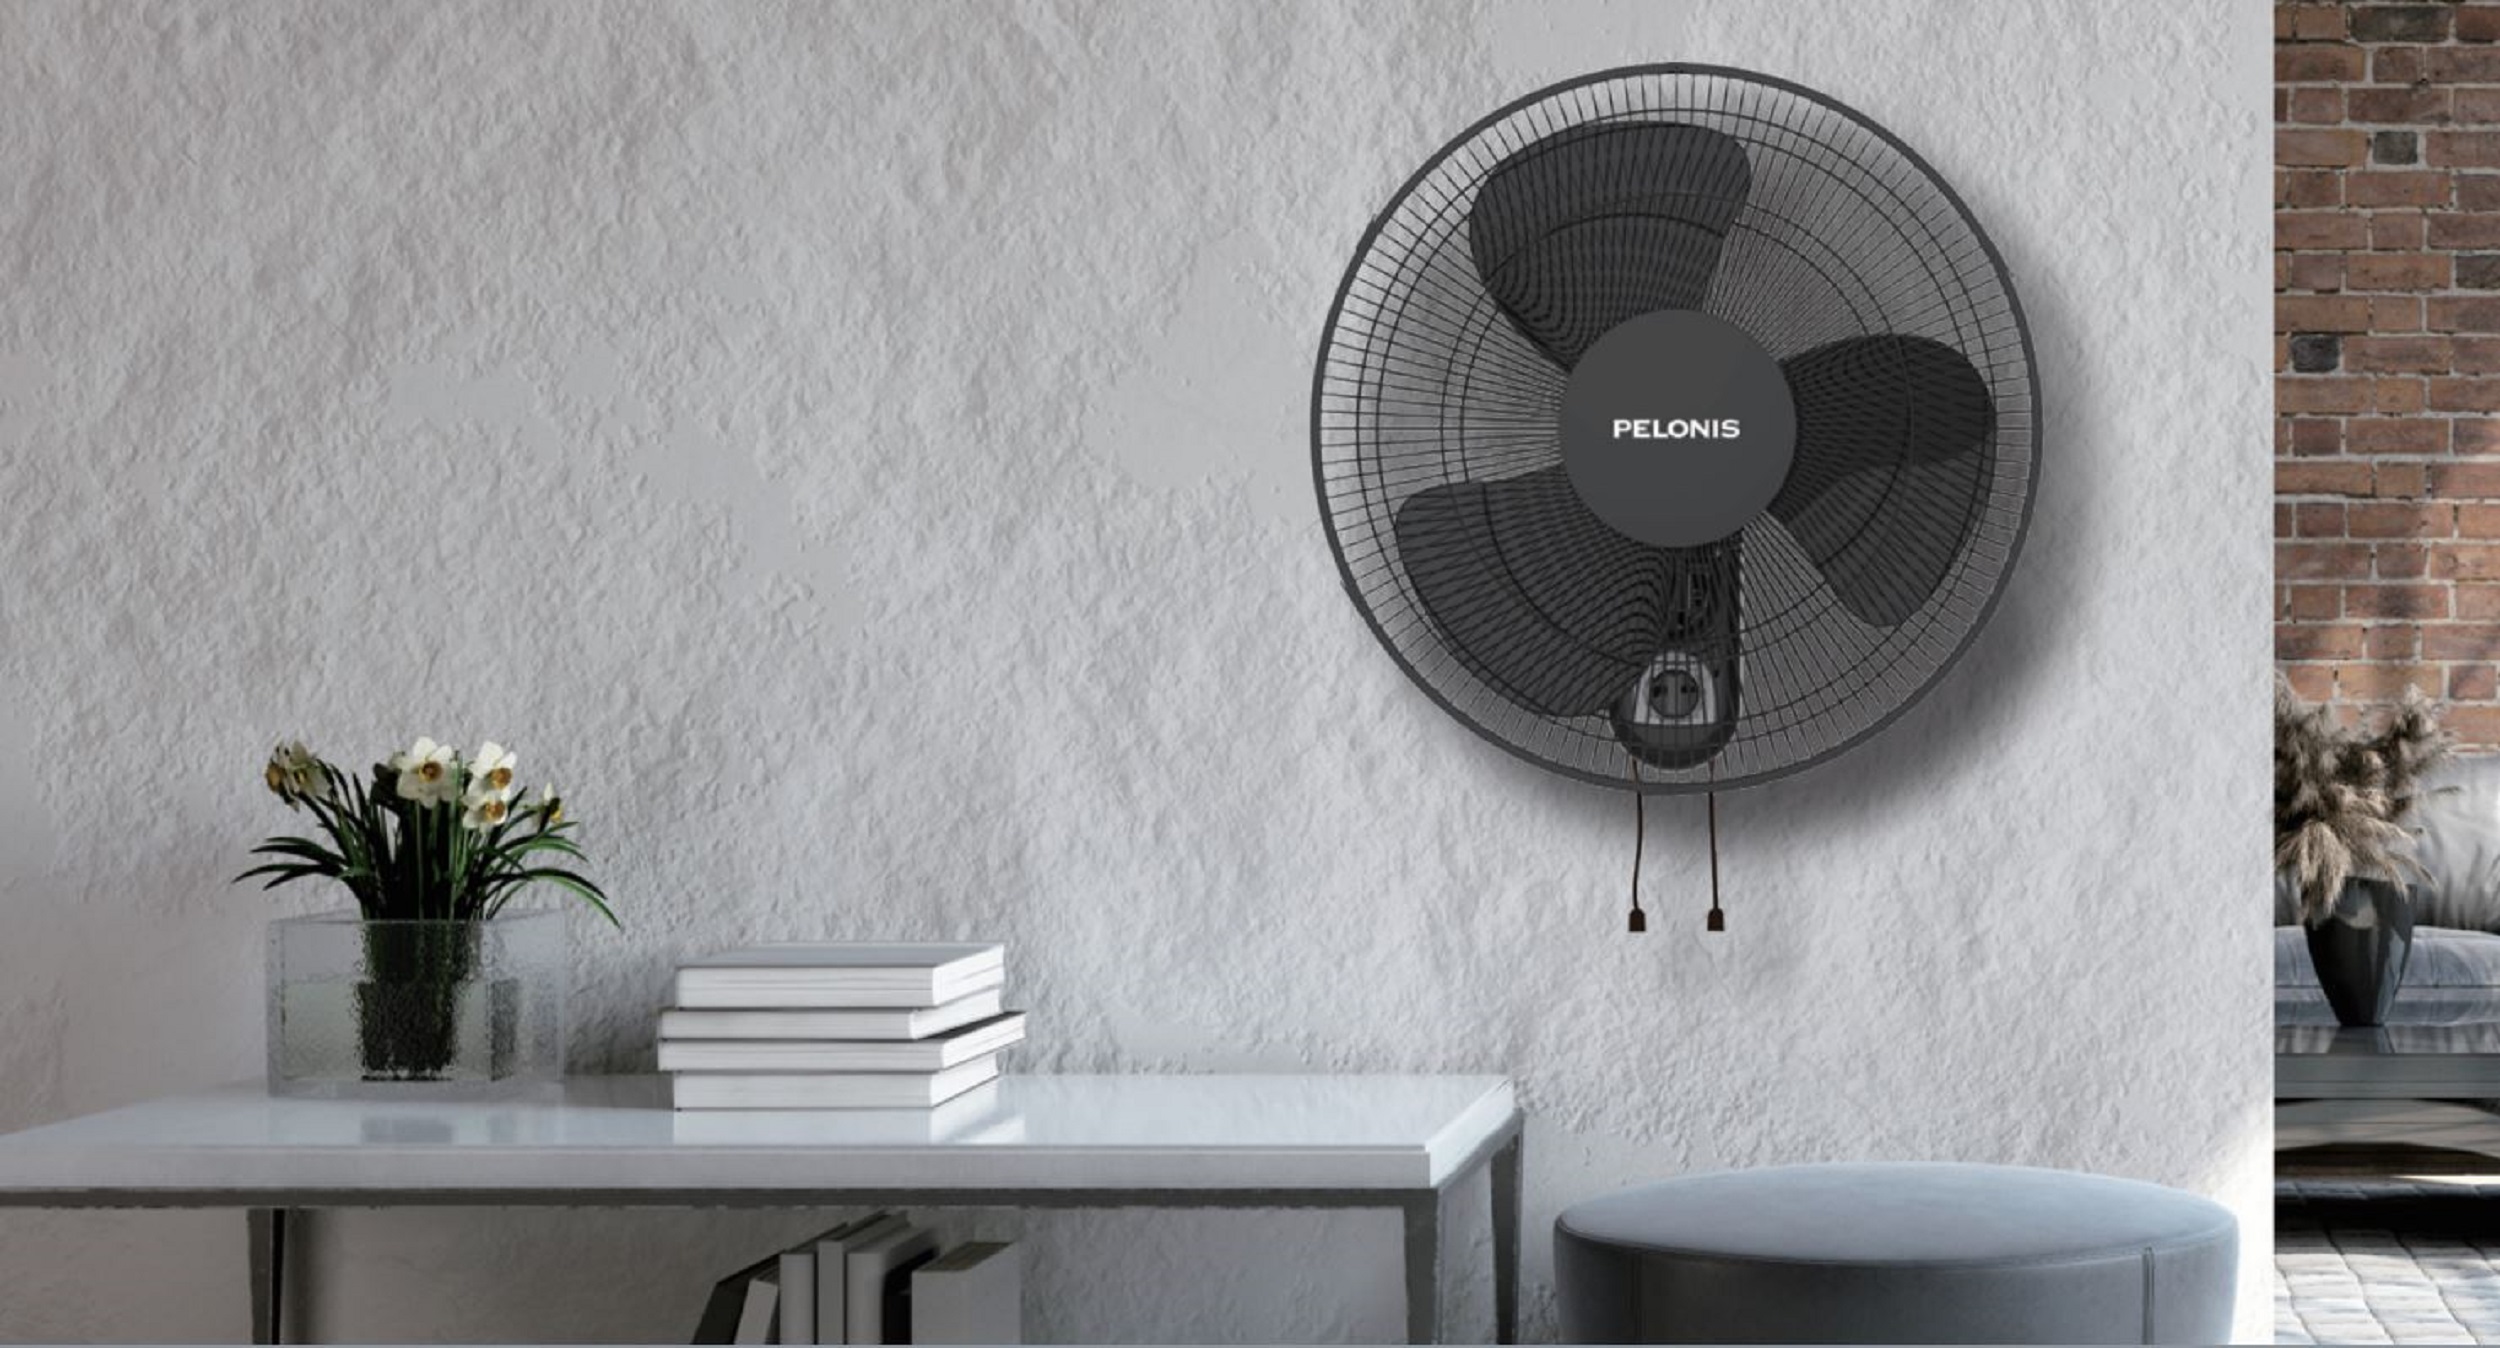 Pelonis 16" 3-Speed Oscillating Wall Mount Fan, FW40-F3B, New, Black - image 2 of 7